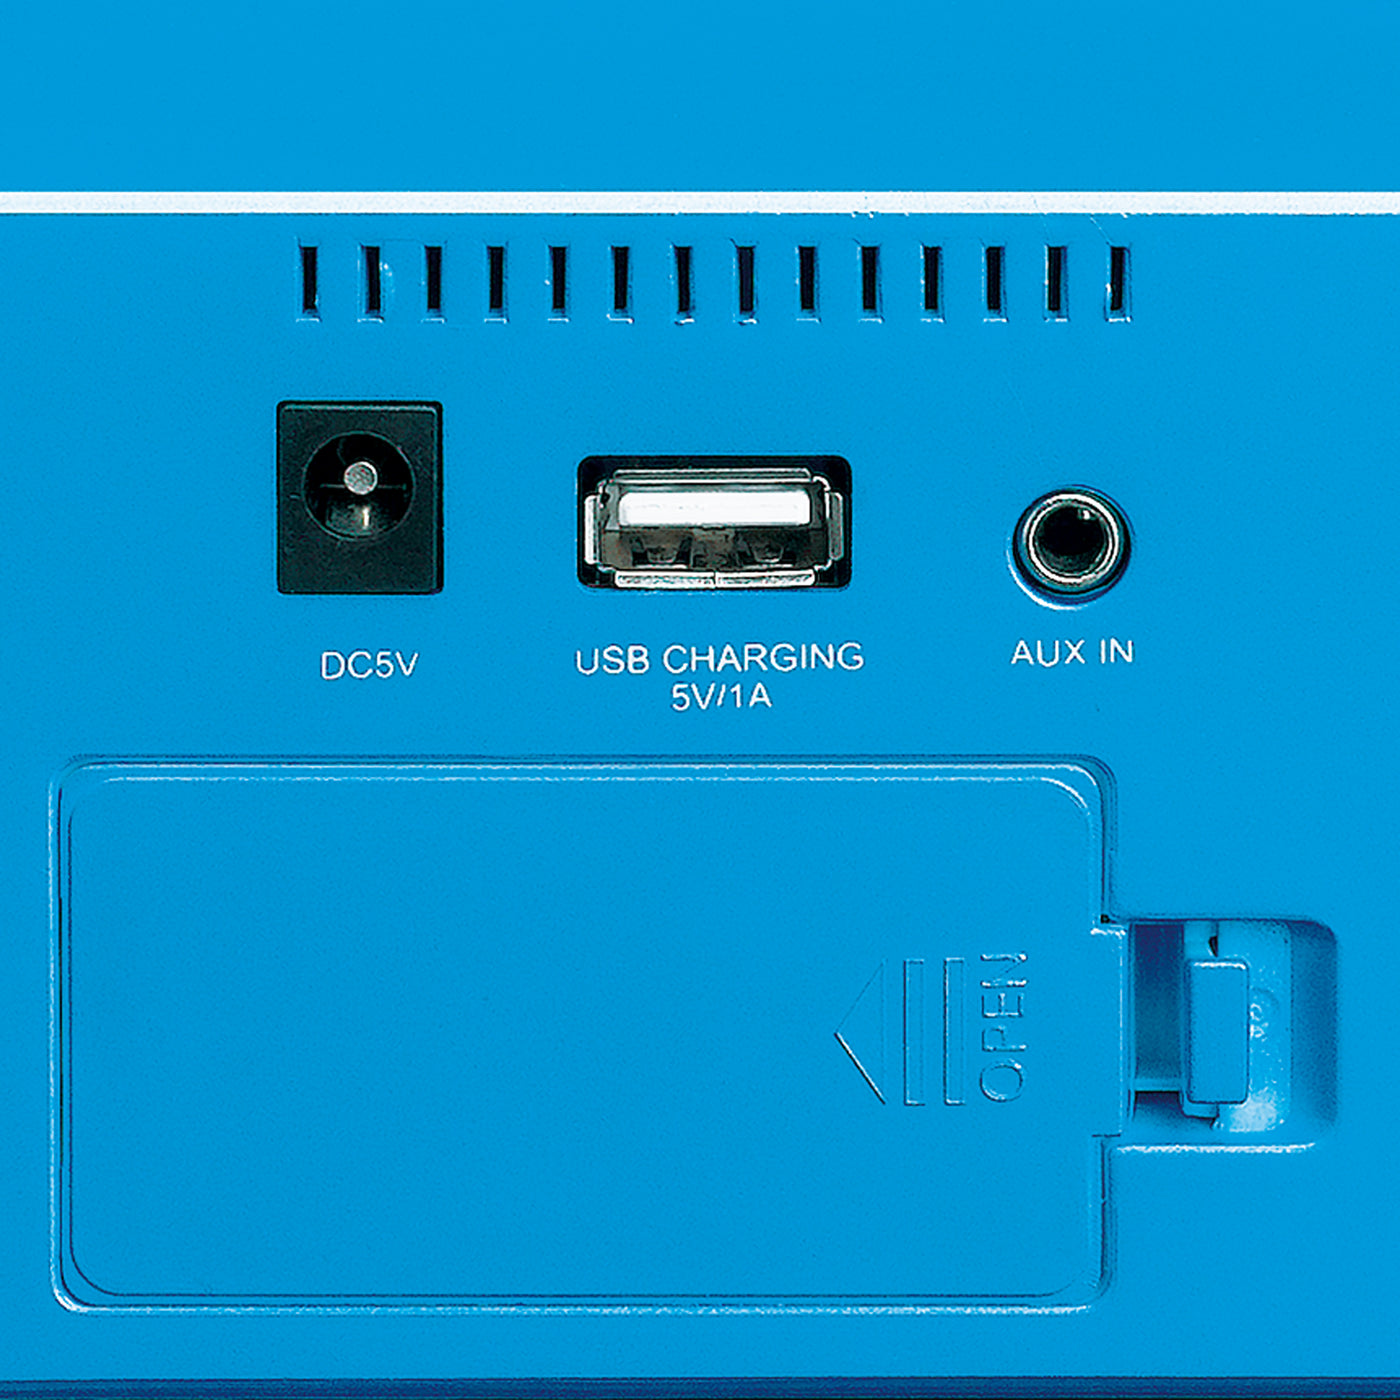 LENCO CR-520BU - Stereo FM clock radio with USB port - Blue